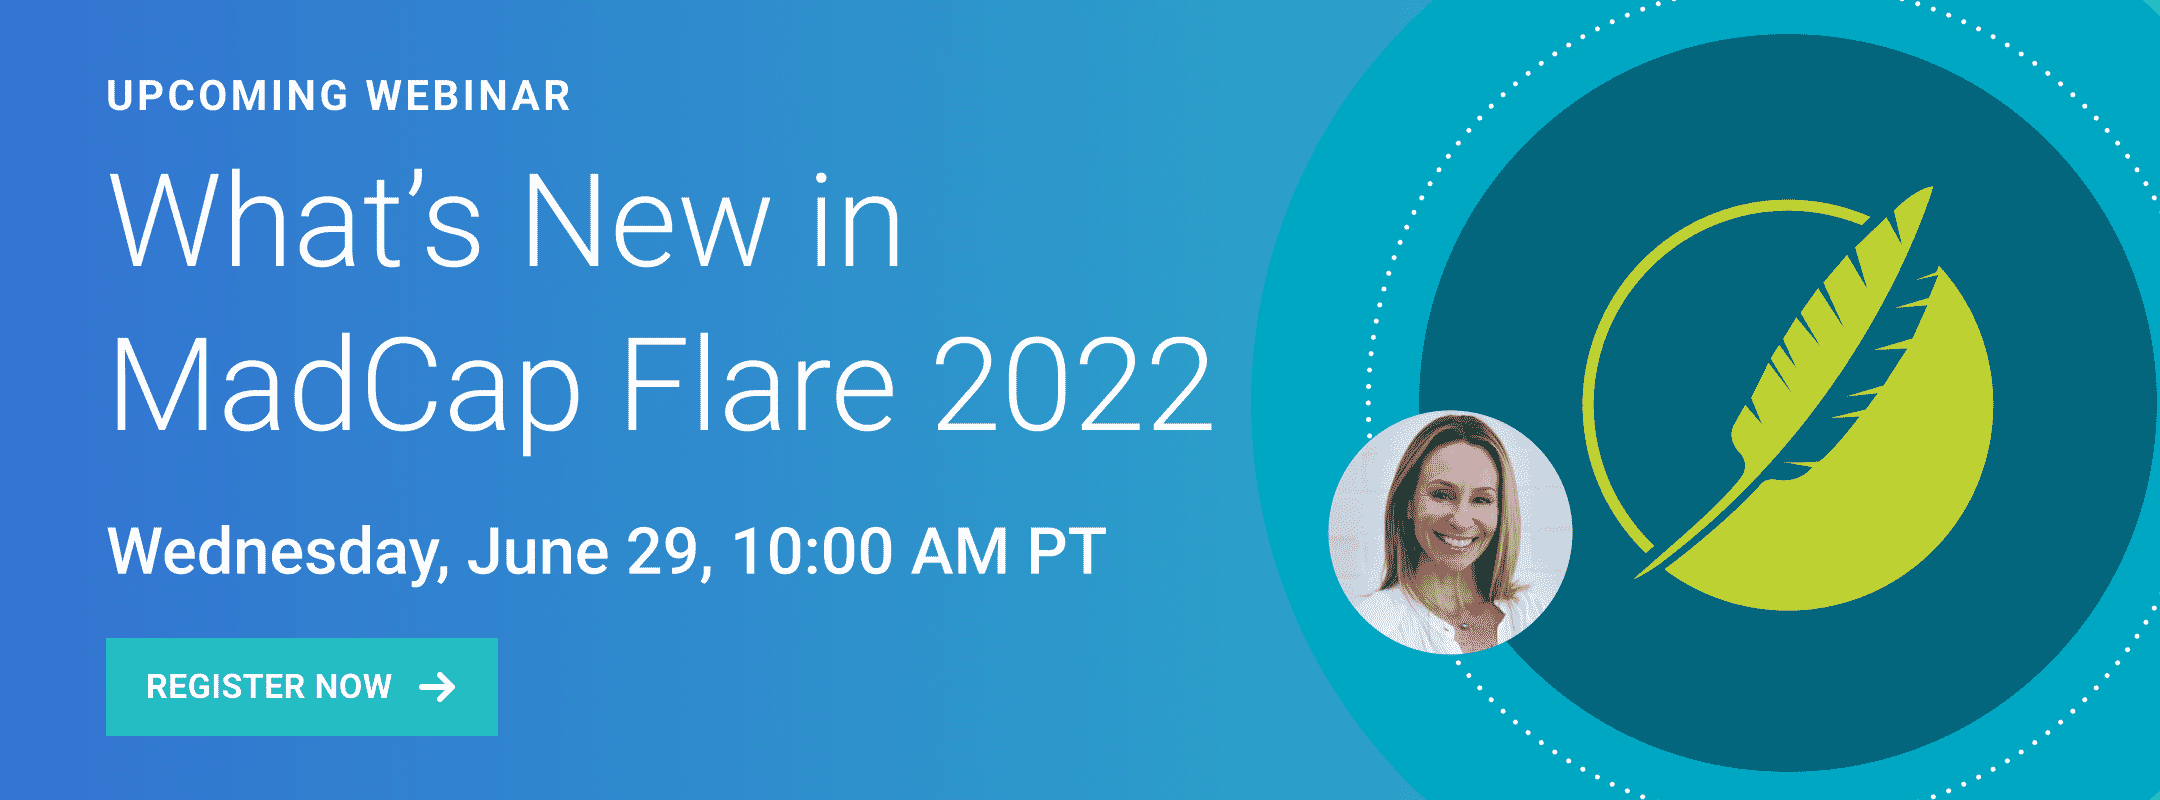 Upcoming Flare 2022 Webinar